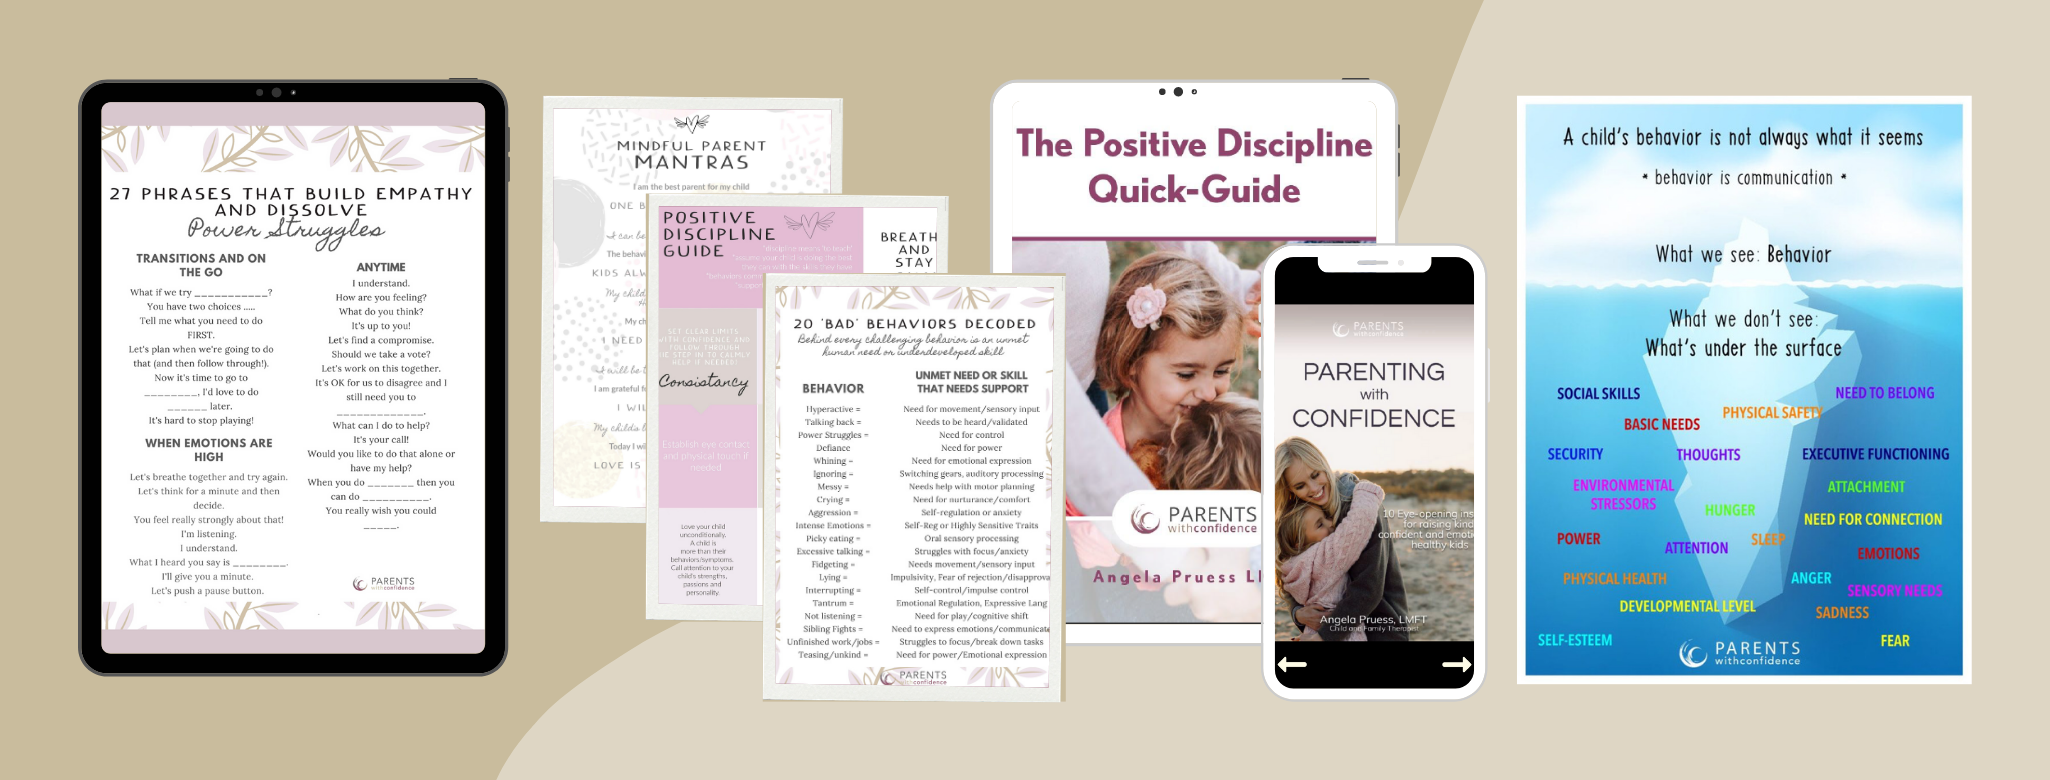 positive discipline guide